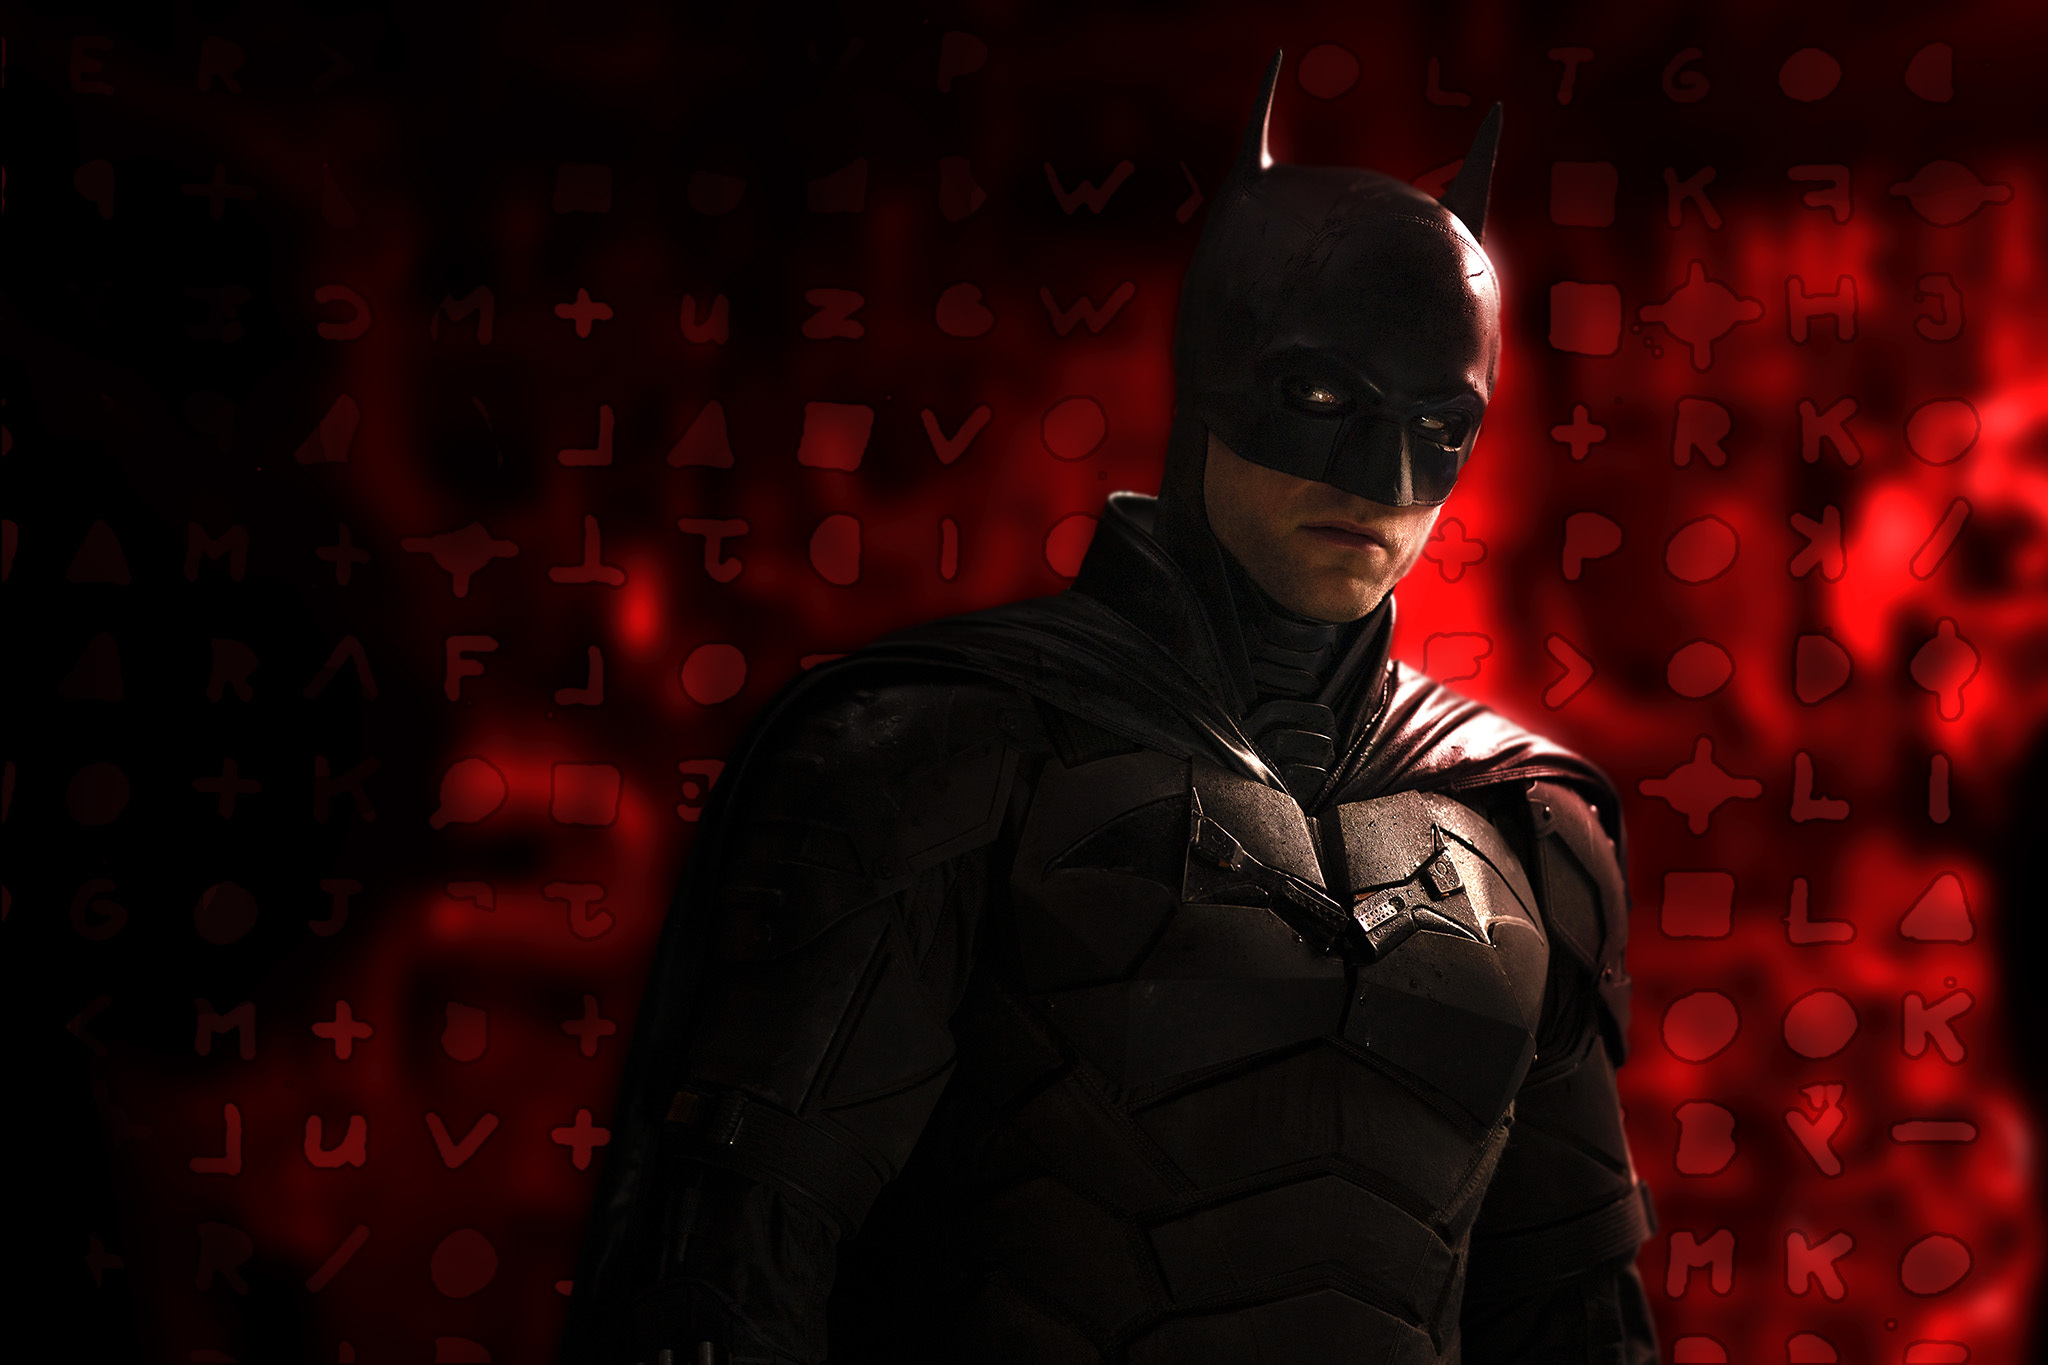 DC Brutal Batman on Fire Wallpapers - Batman Wallpapers iPhone